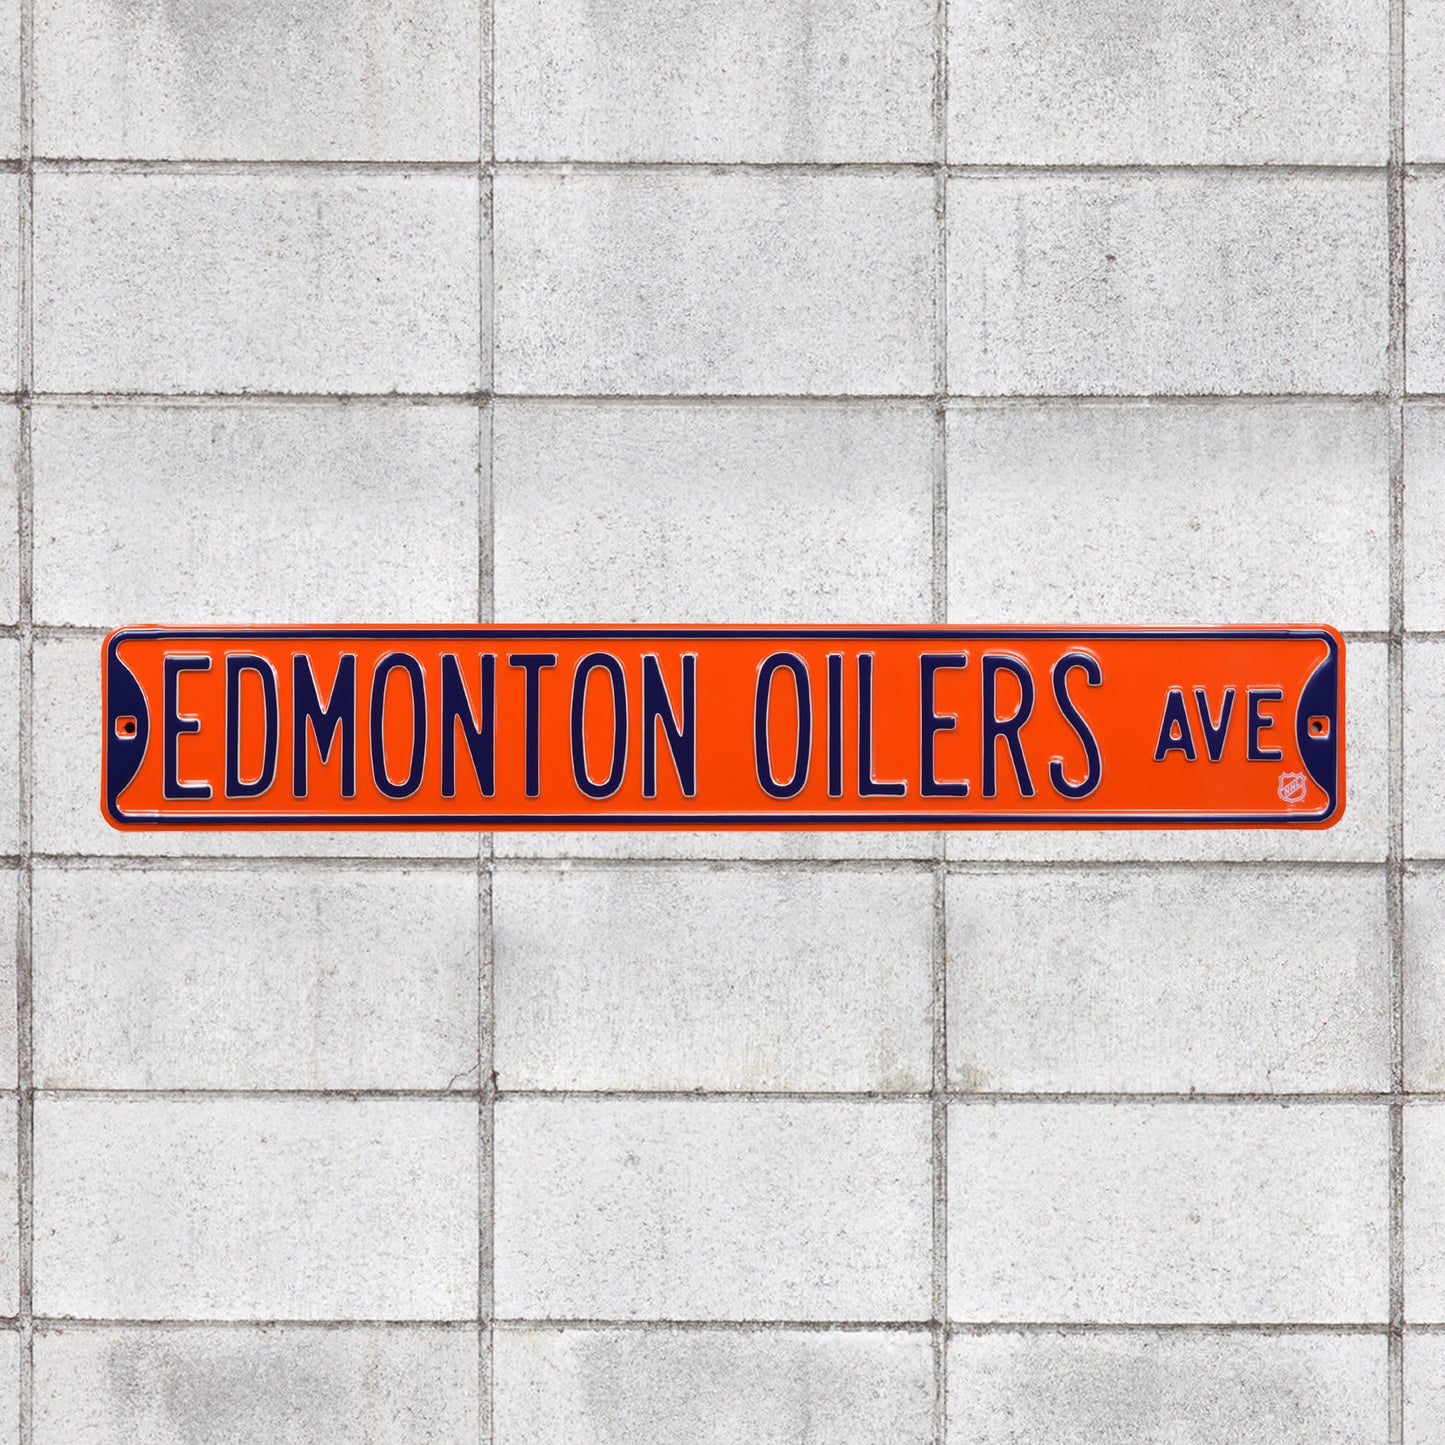 Edmonton Oilers: Edmonton Oilers Avenue - Officially Licensed NHL Metal Street Sign